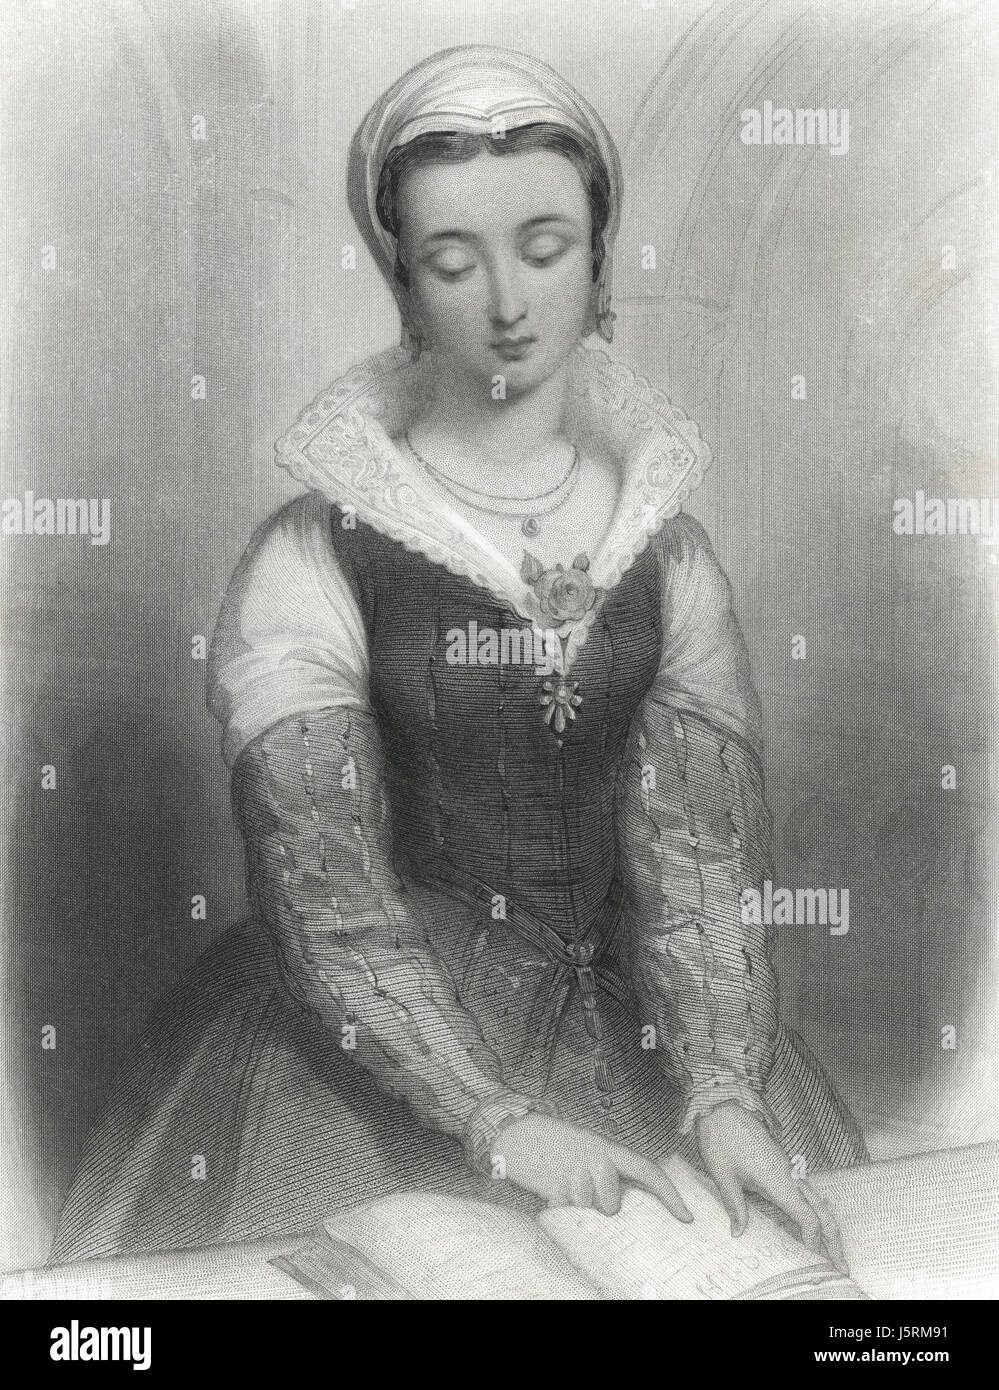 Lady Jane Grey (1537-54), Portrait, Engraving Stock Photo